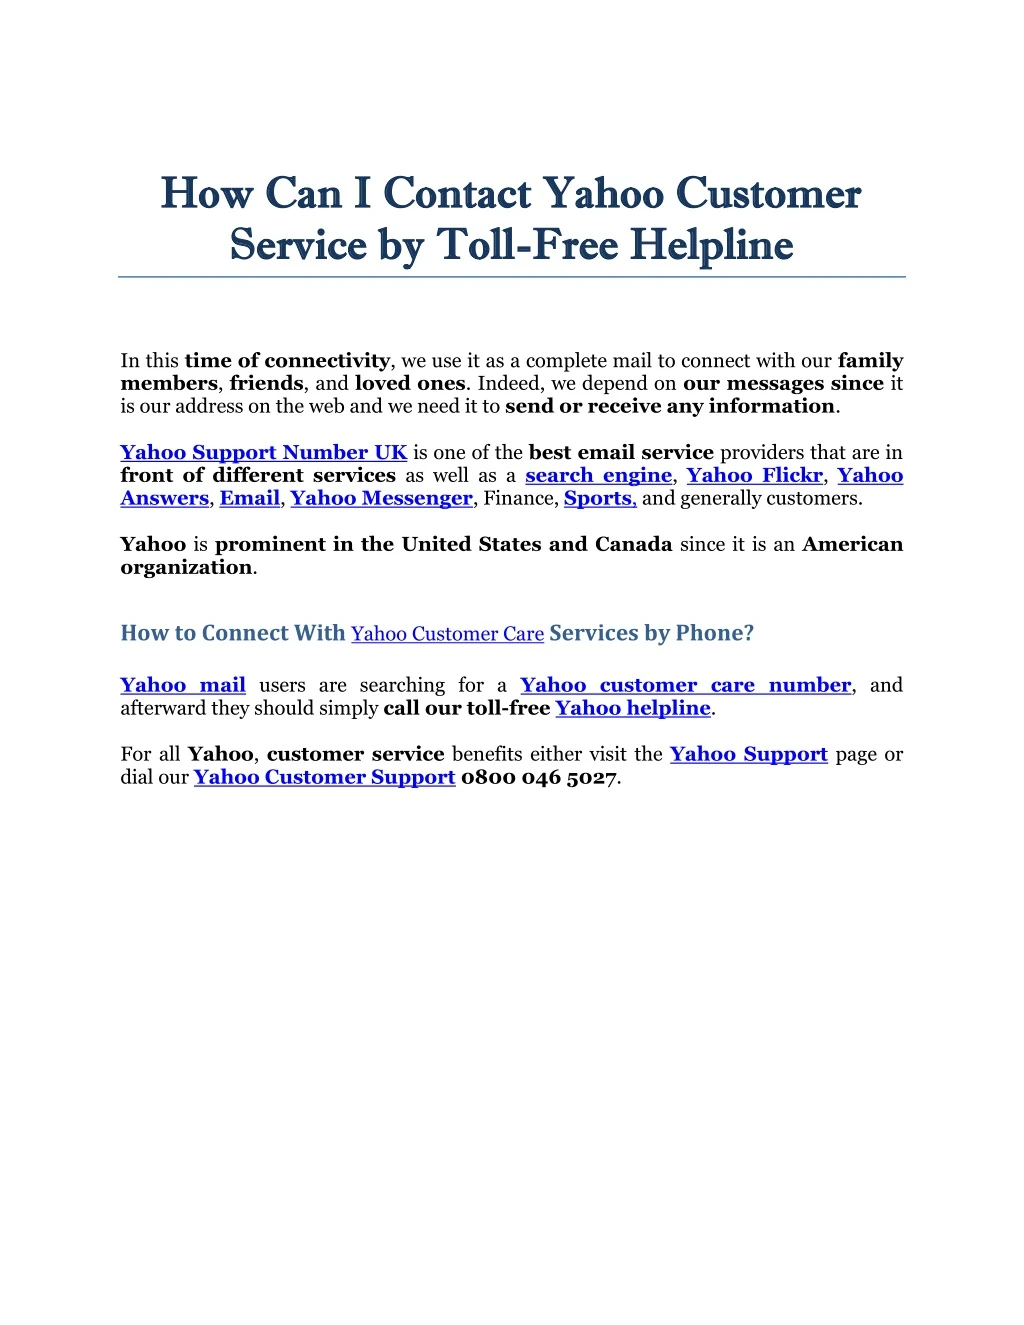 how can i contact yahoo customer